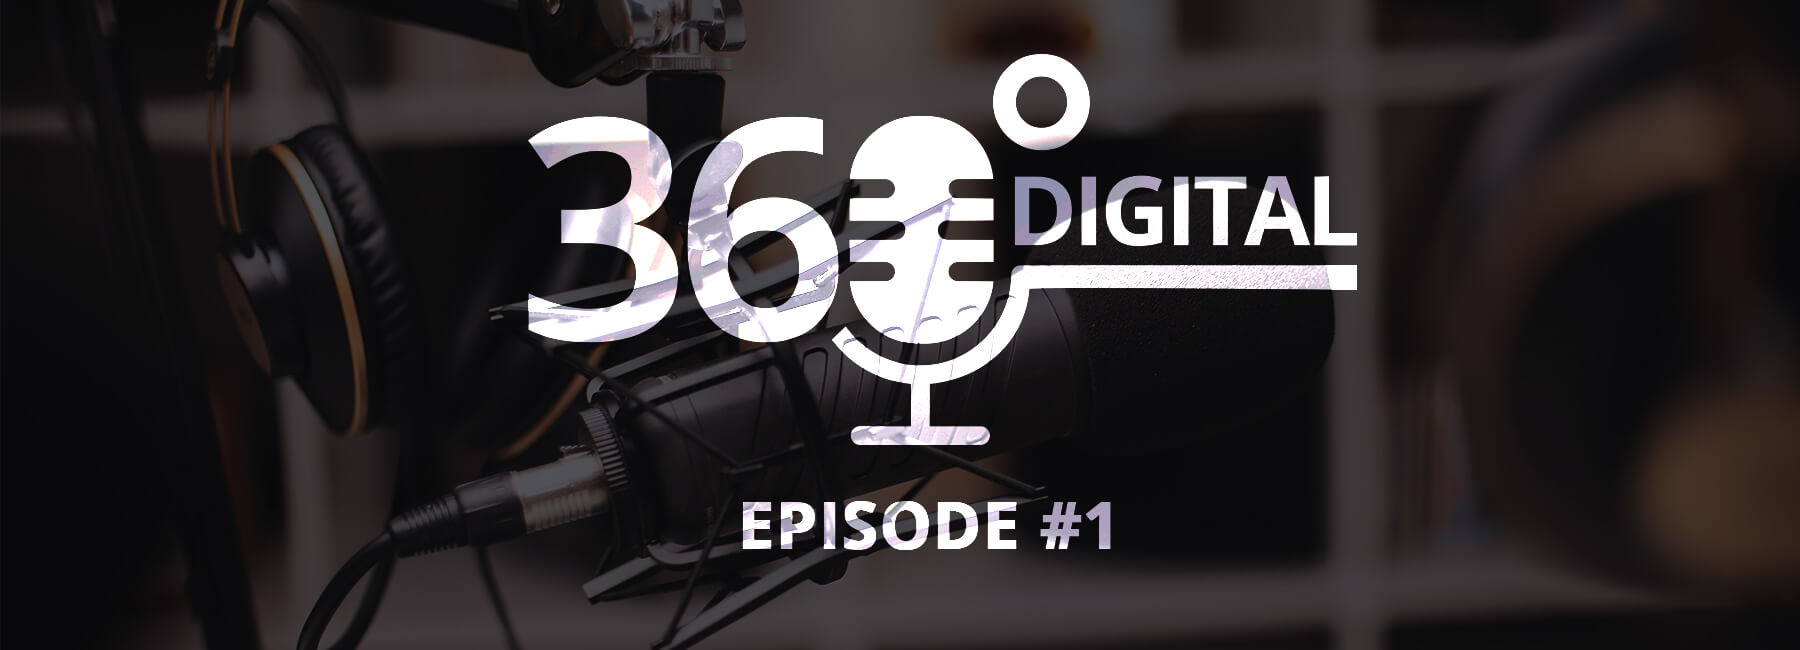 Mopinion Lanceert nieuwe Podcast: 360 Digital